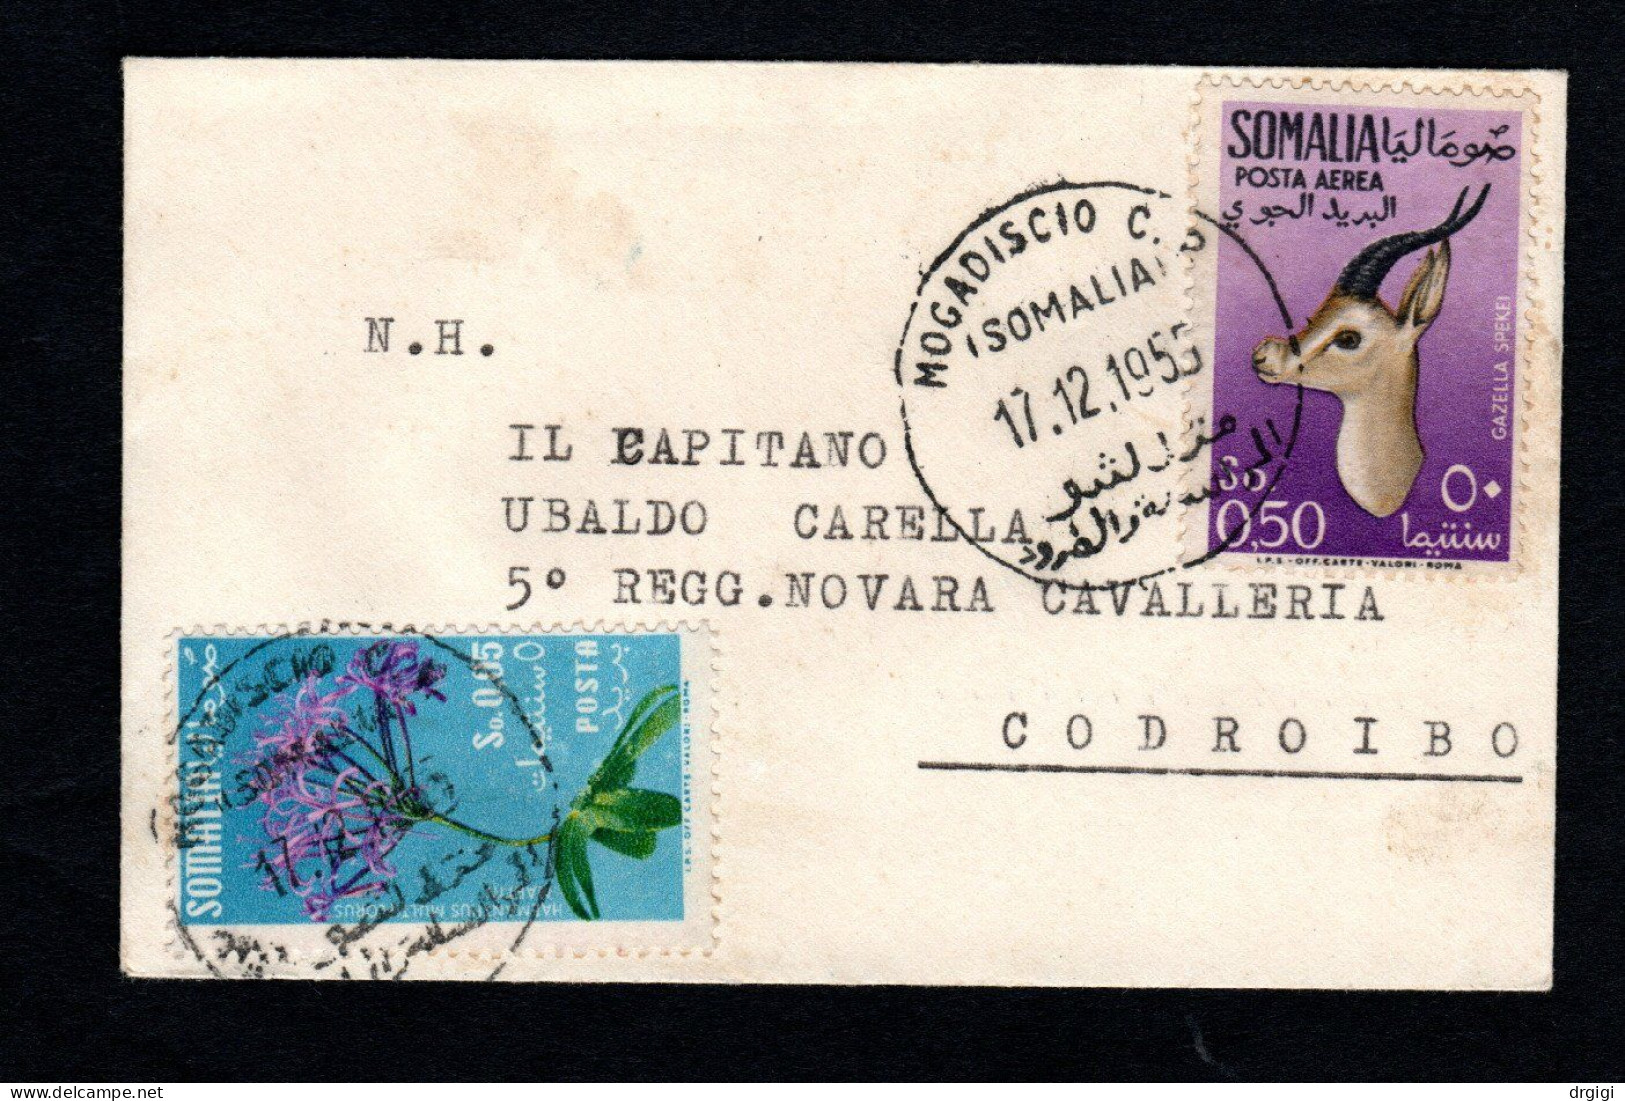 Somalia AFIS, BUSTINA VIAGGIATA 1955, MOGADISCIO PER CODROIPO (UD) - Somalia (AFIS)